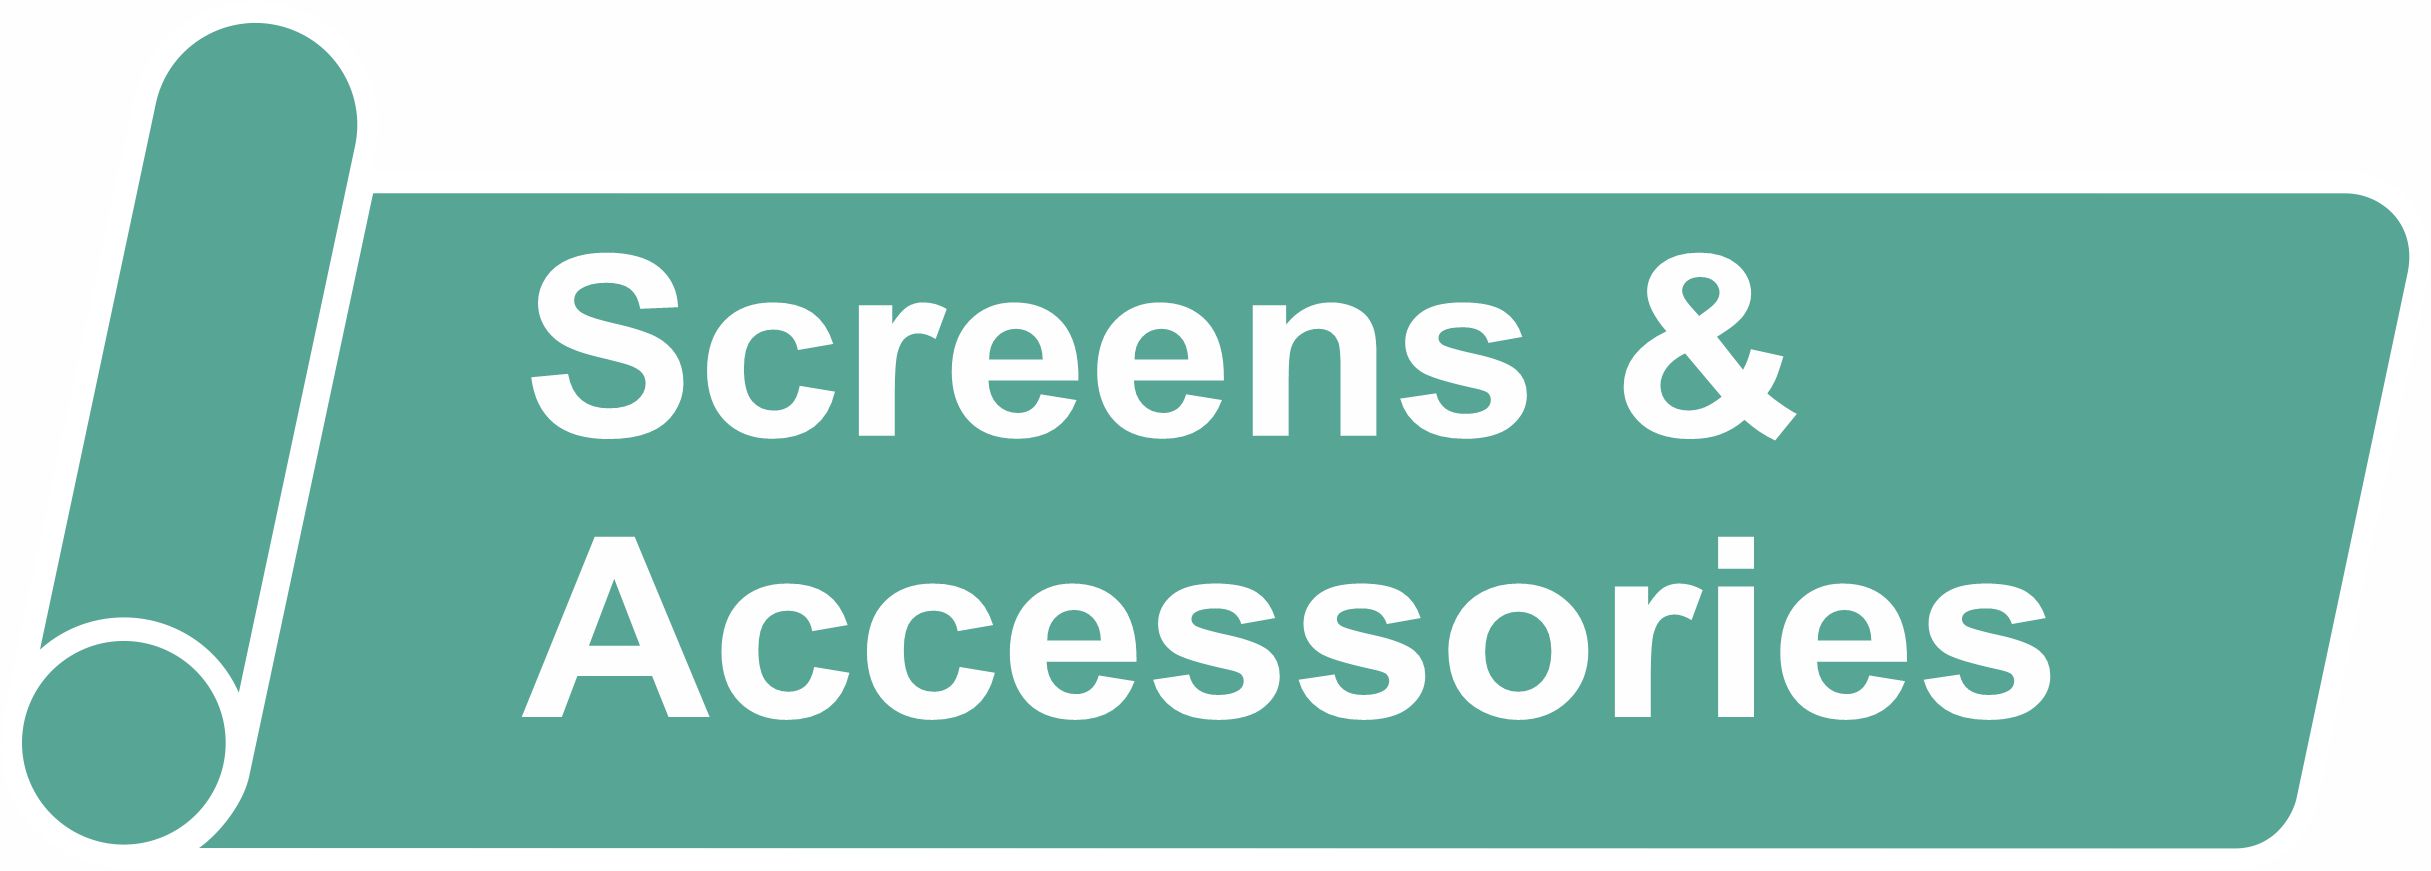 Screens & Accessories